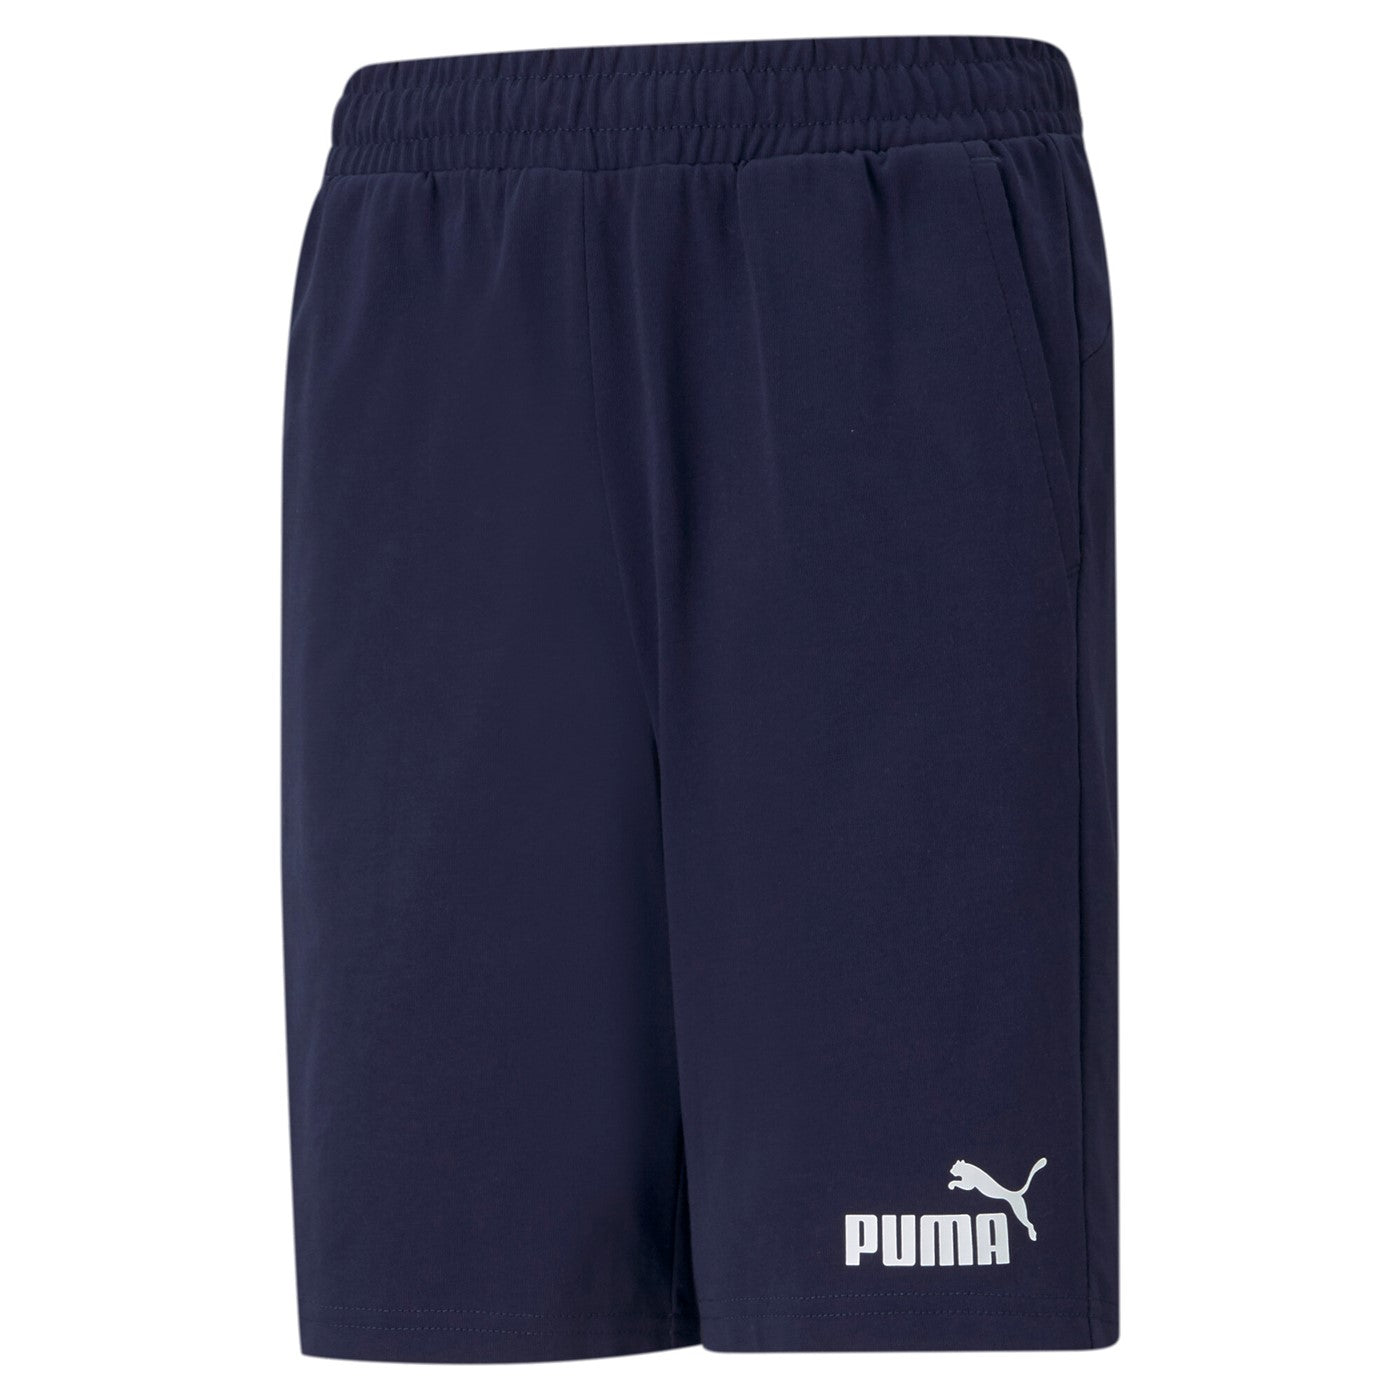 Puma pantaloncino sportivo da ragazzo ESS Jersey Shorts B 586971 06 peacoat